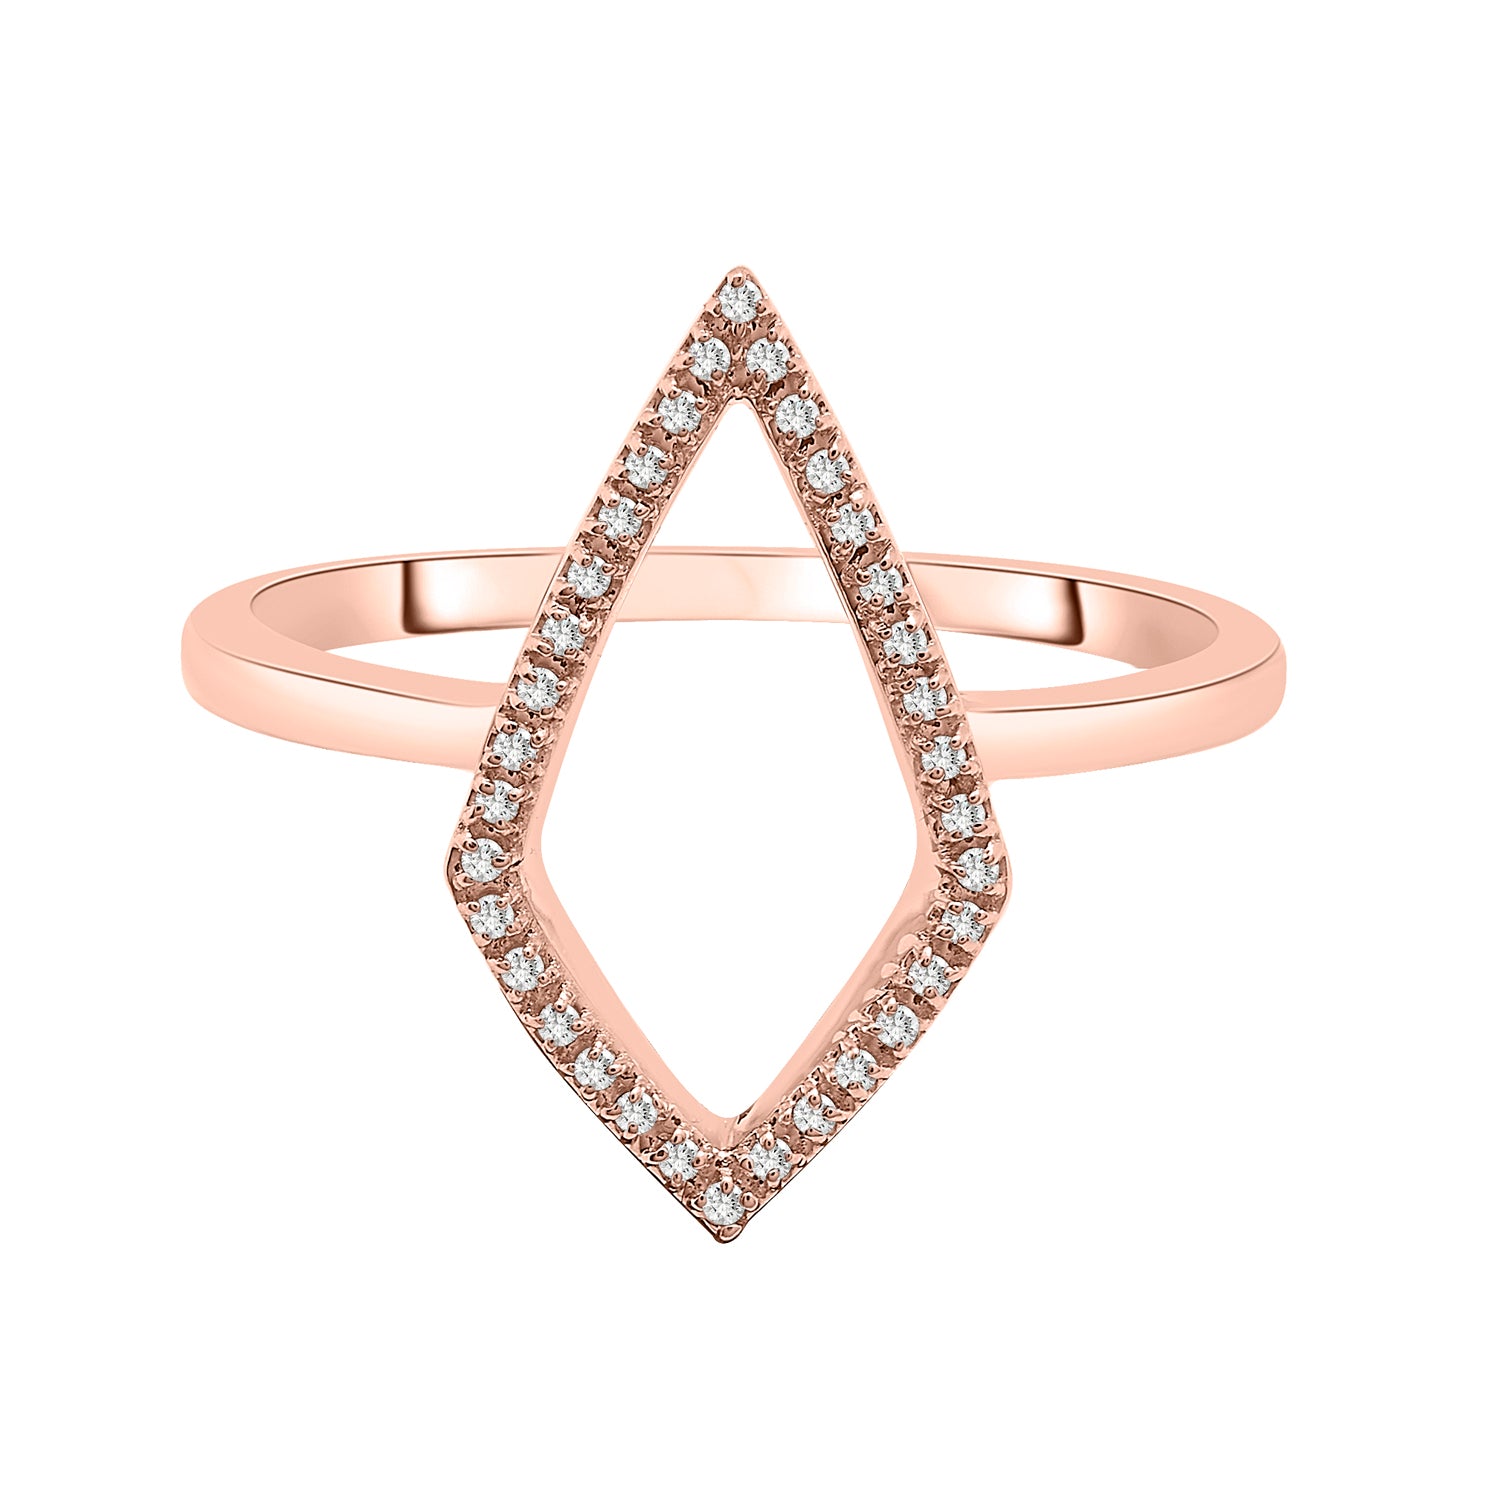 Rowan Open Shape Ring in Rose Gold with Diamonds